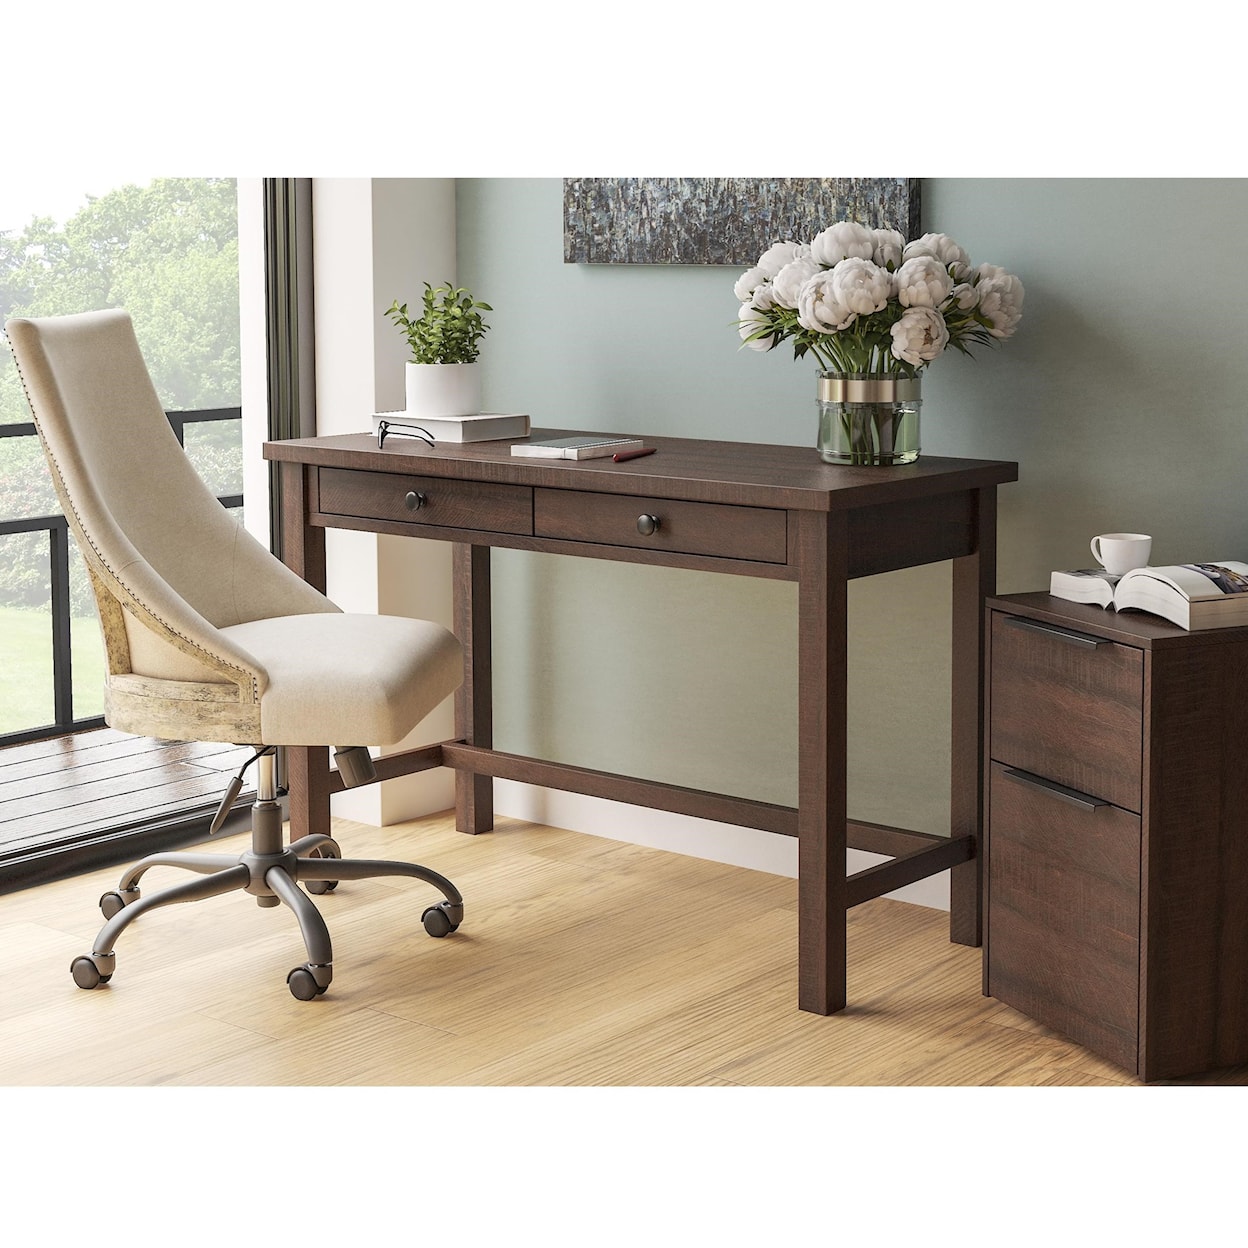 Ashley Furniture Signature Design Camiburg Home Office Desk